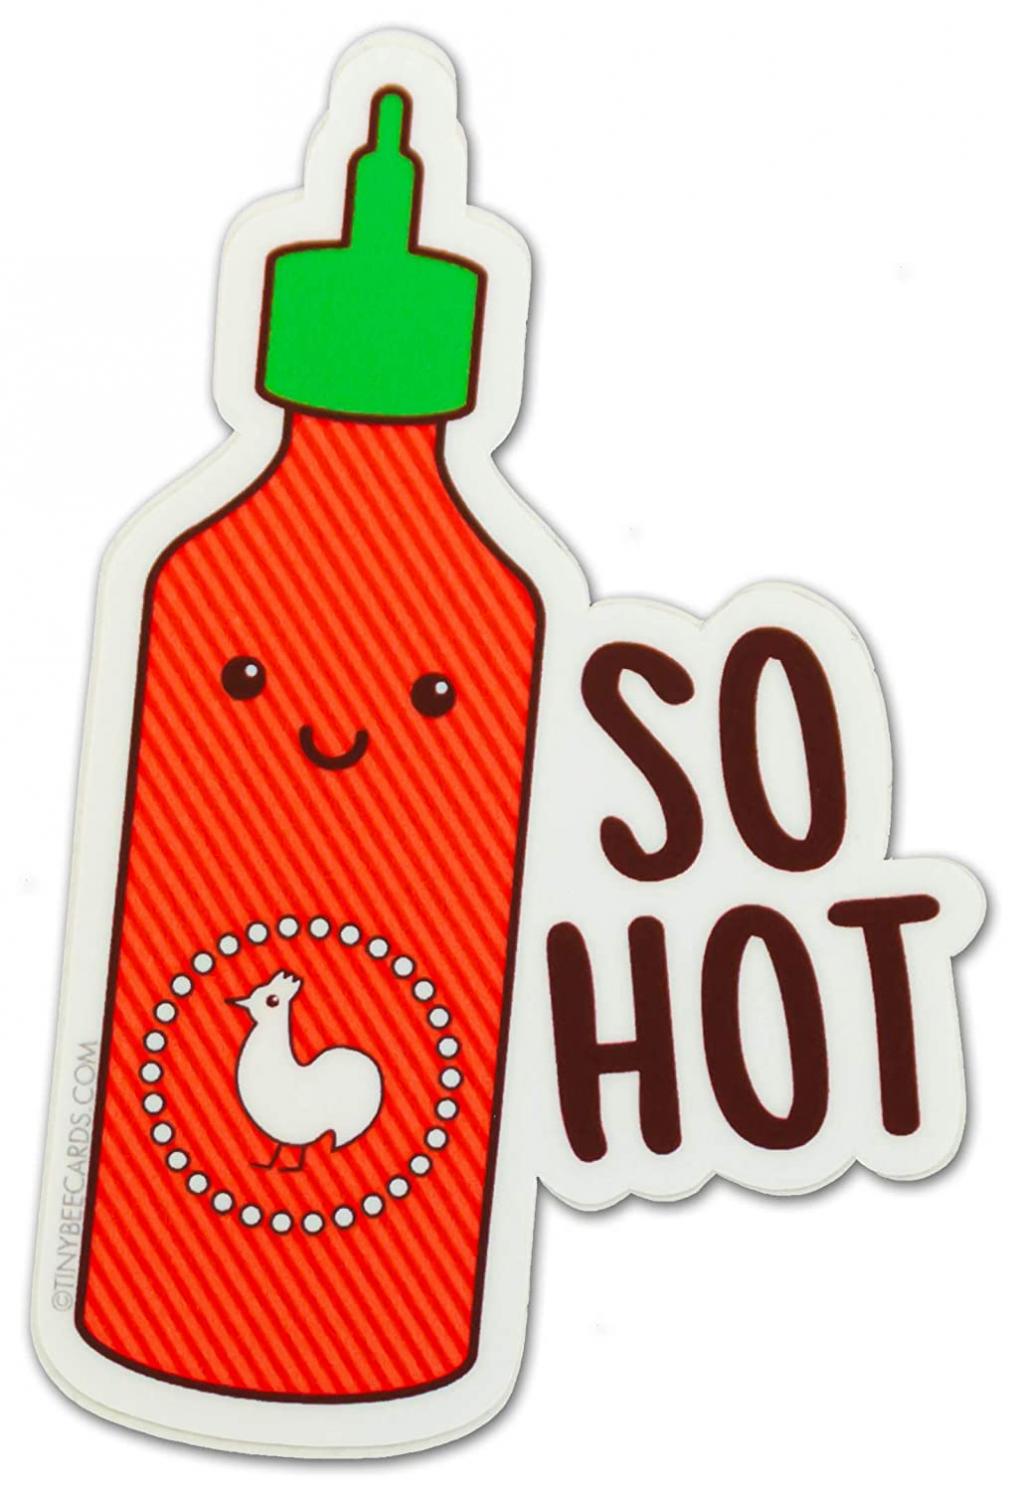 Sriracha Vinyl Sticker"So Hot" - Spicy Hot Sauce Foodie Decal Gift, Kawaii Food Pun Water Bottle Laptop or Bike Sticker